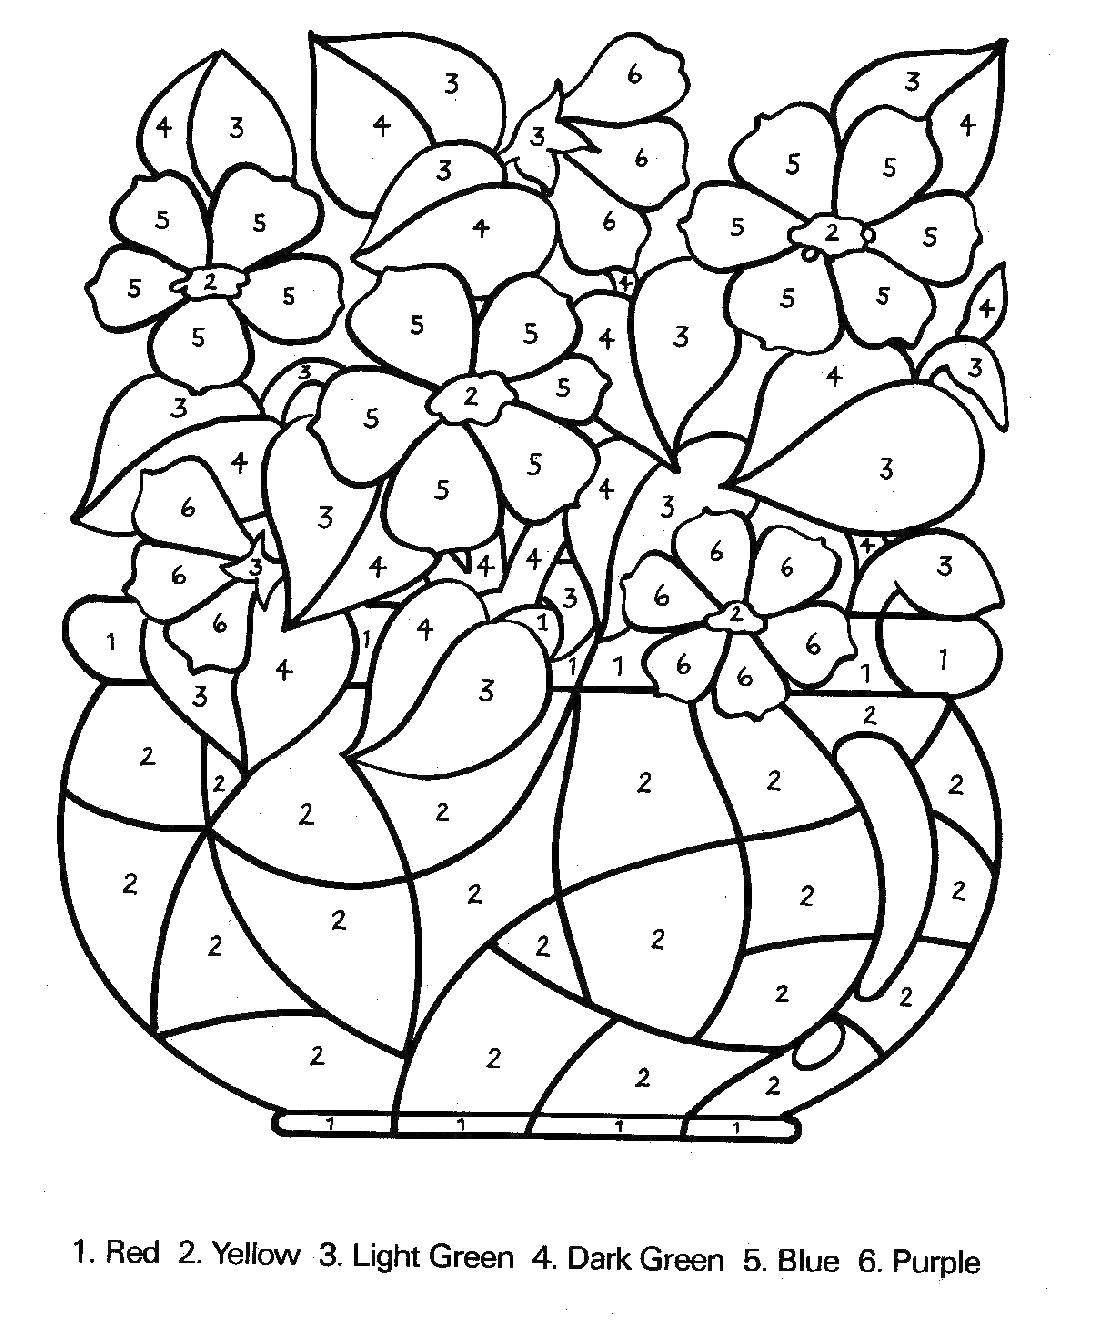 Название: Раскраска По номерам ваза с цветочком. Категория: По номерам. Теги: По номерам, цветы, ваза.